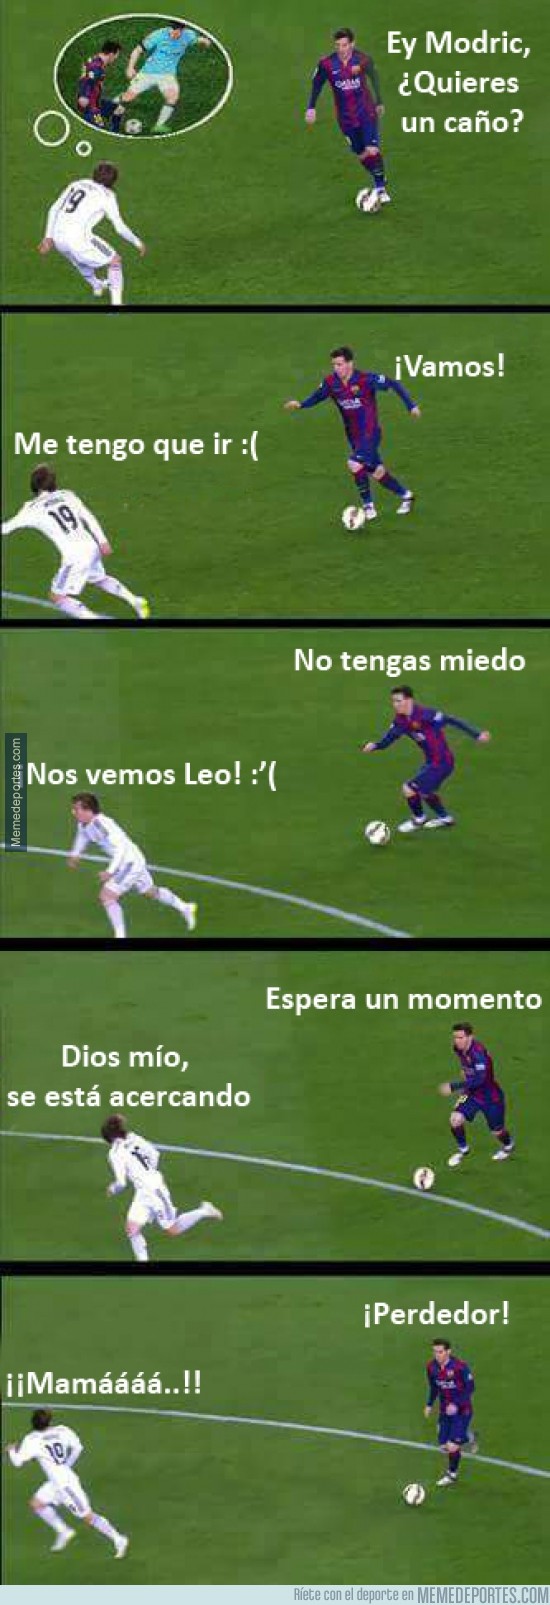 488955 - Modric salió huyendo de Messi al querer hacerle un caño